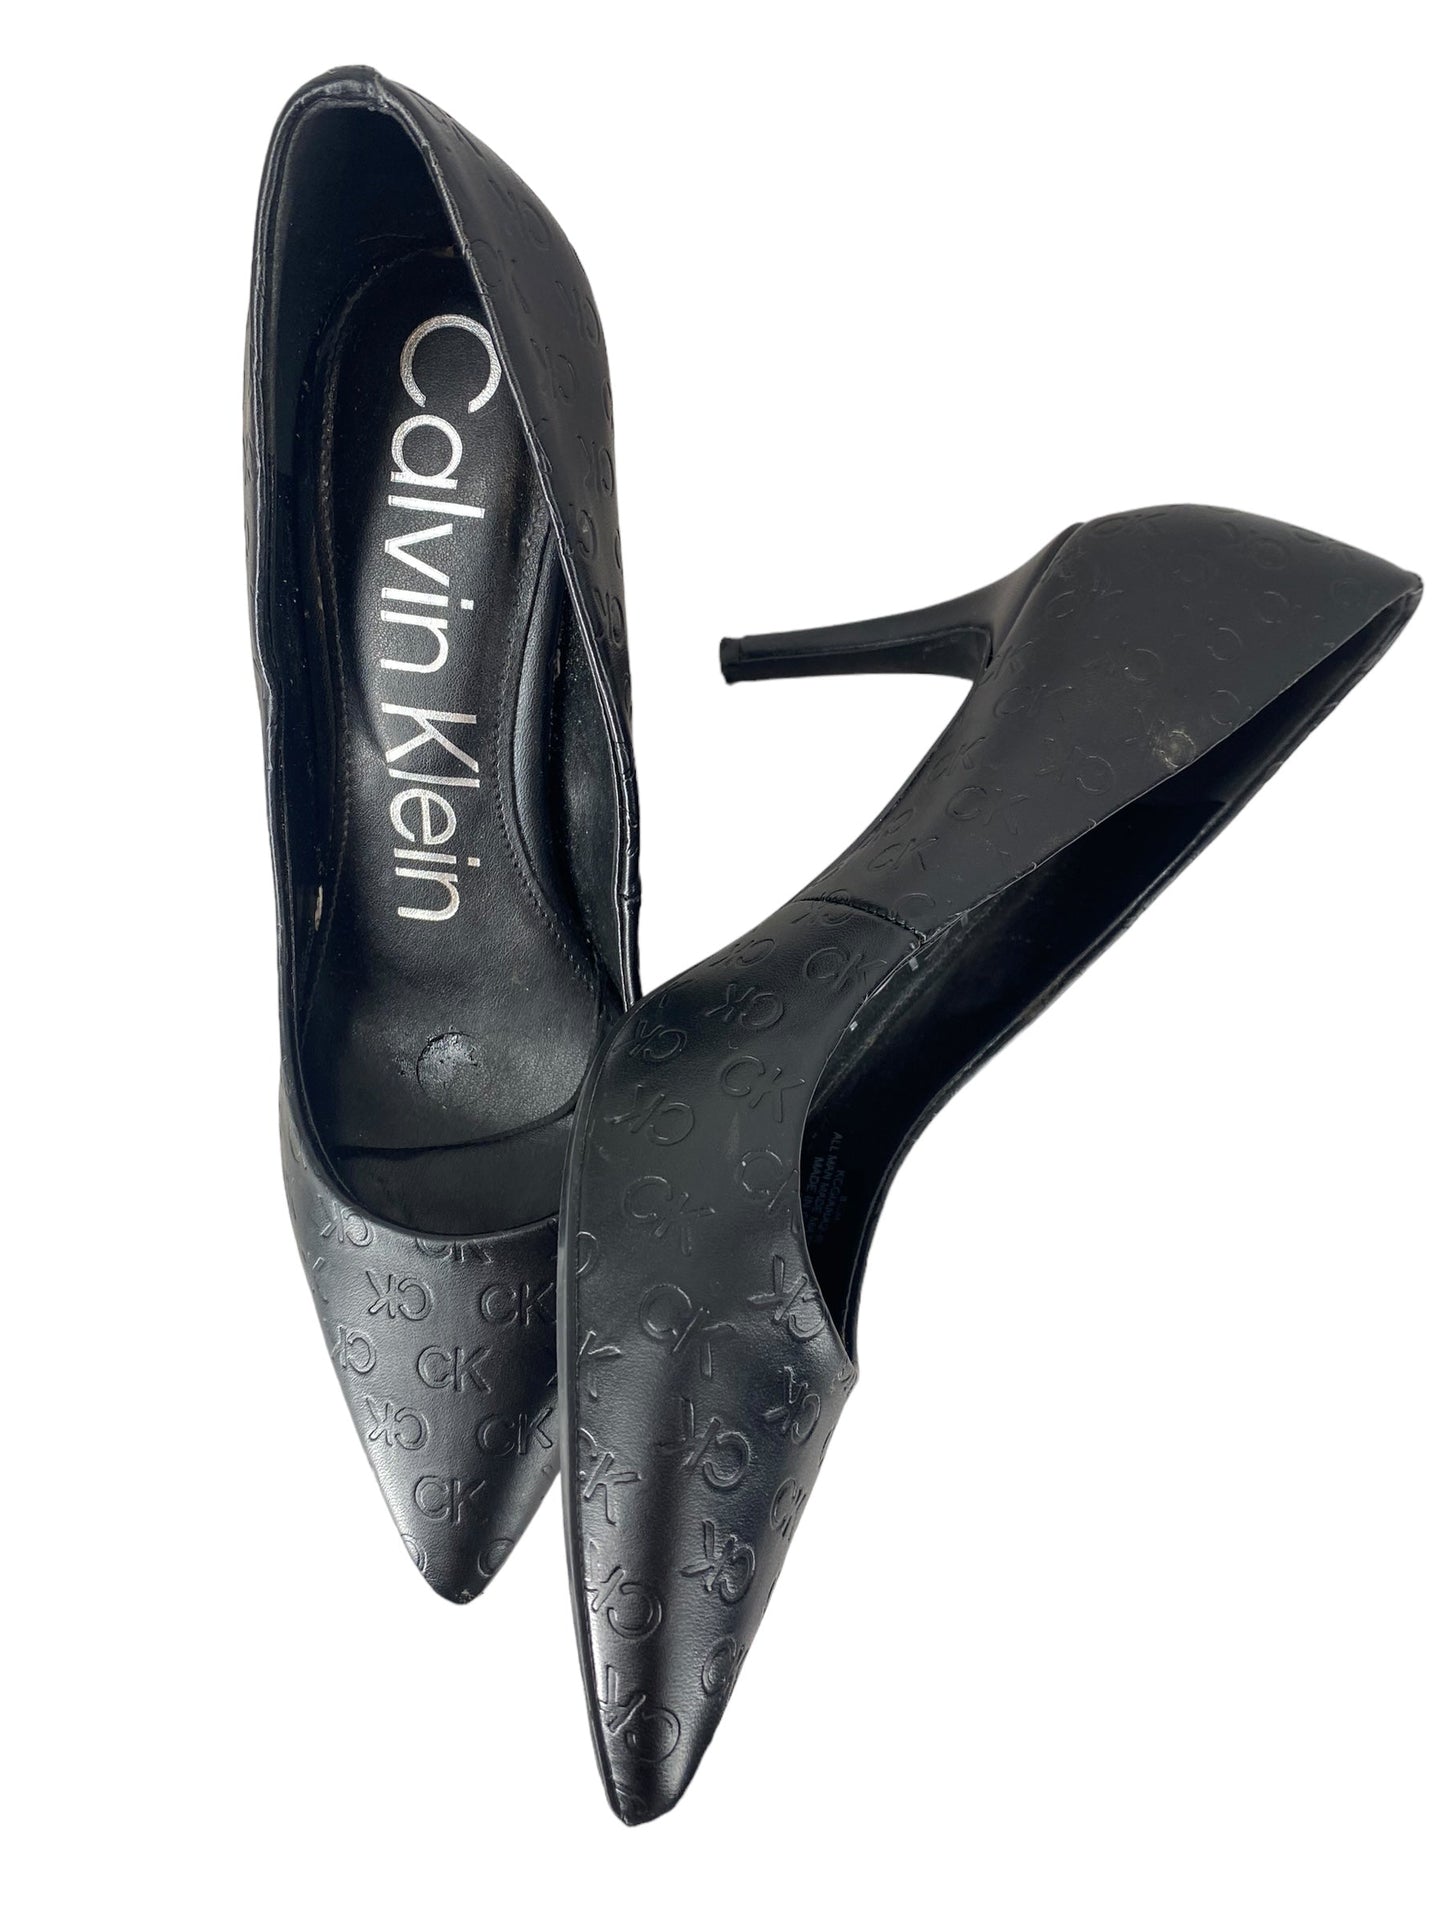 Black Shoes Heels Stiletto Calvin Klein, Size 8.5